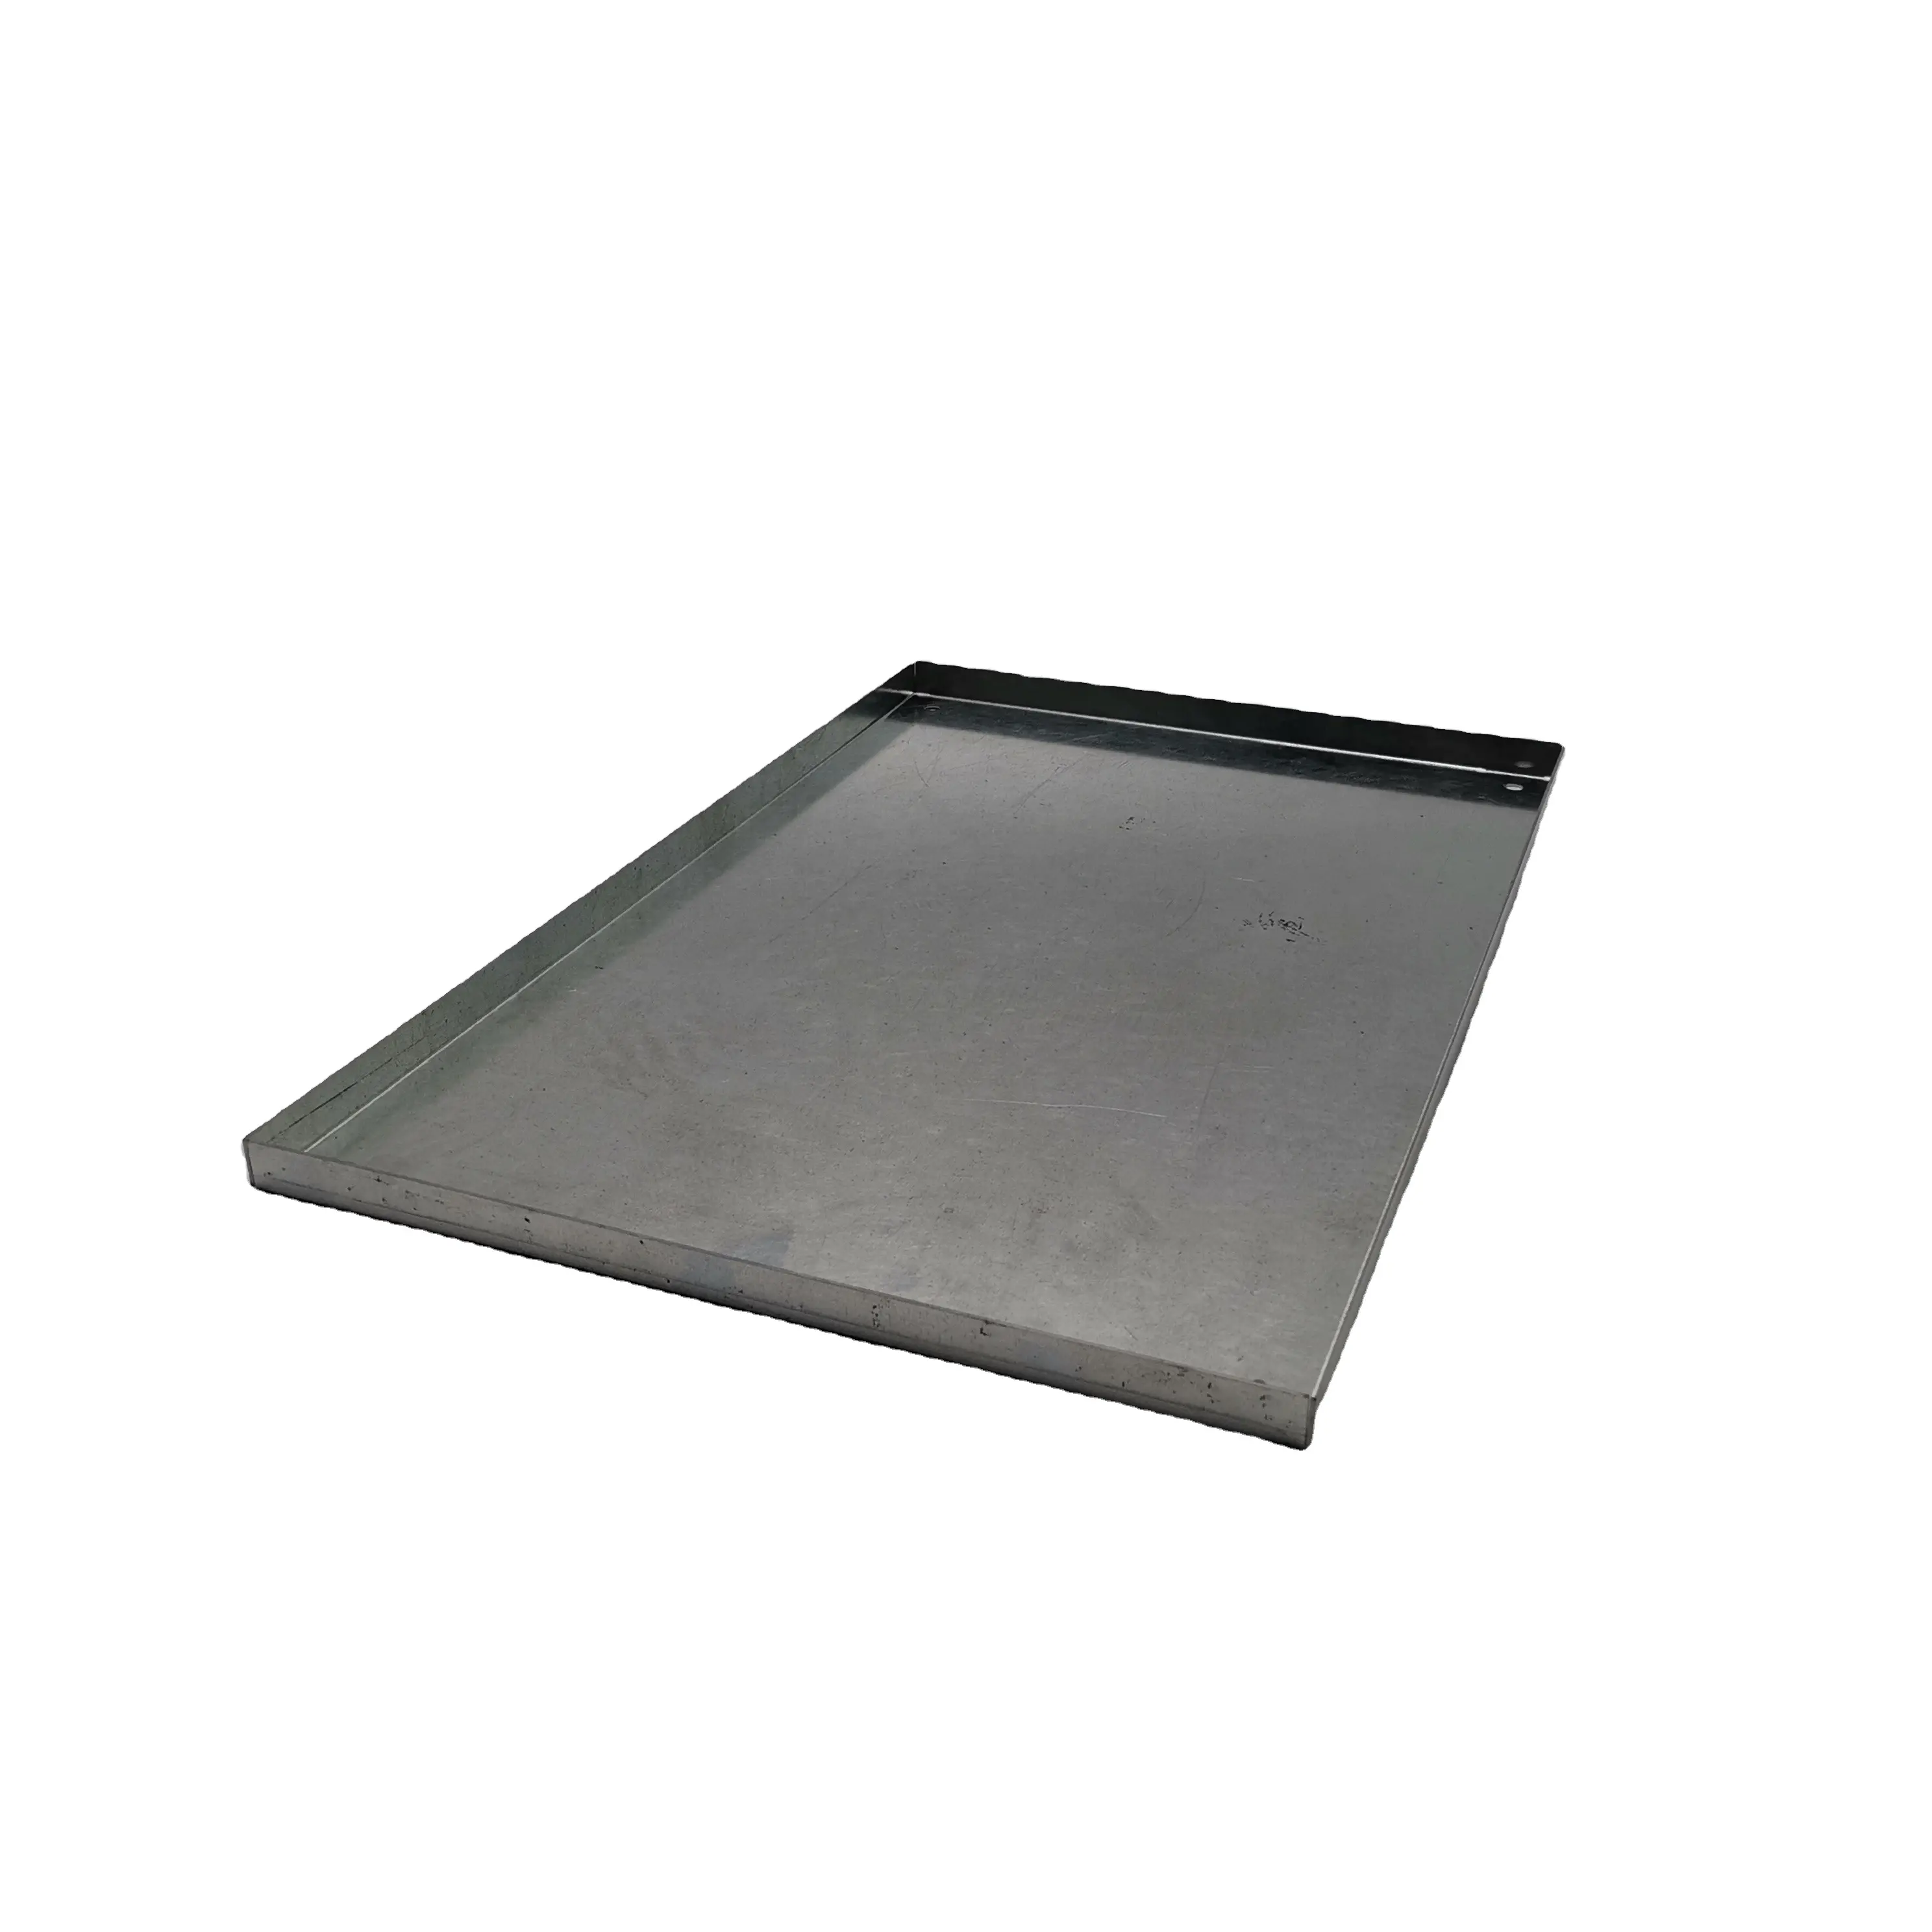 Galvani zed Tray Rack Factory Shelf Boards Metall herstellung Stahls ch arnier Shanghai Tairui Präzisions metall